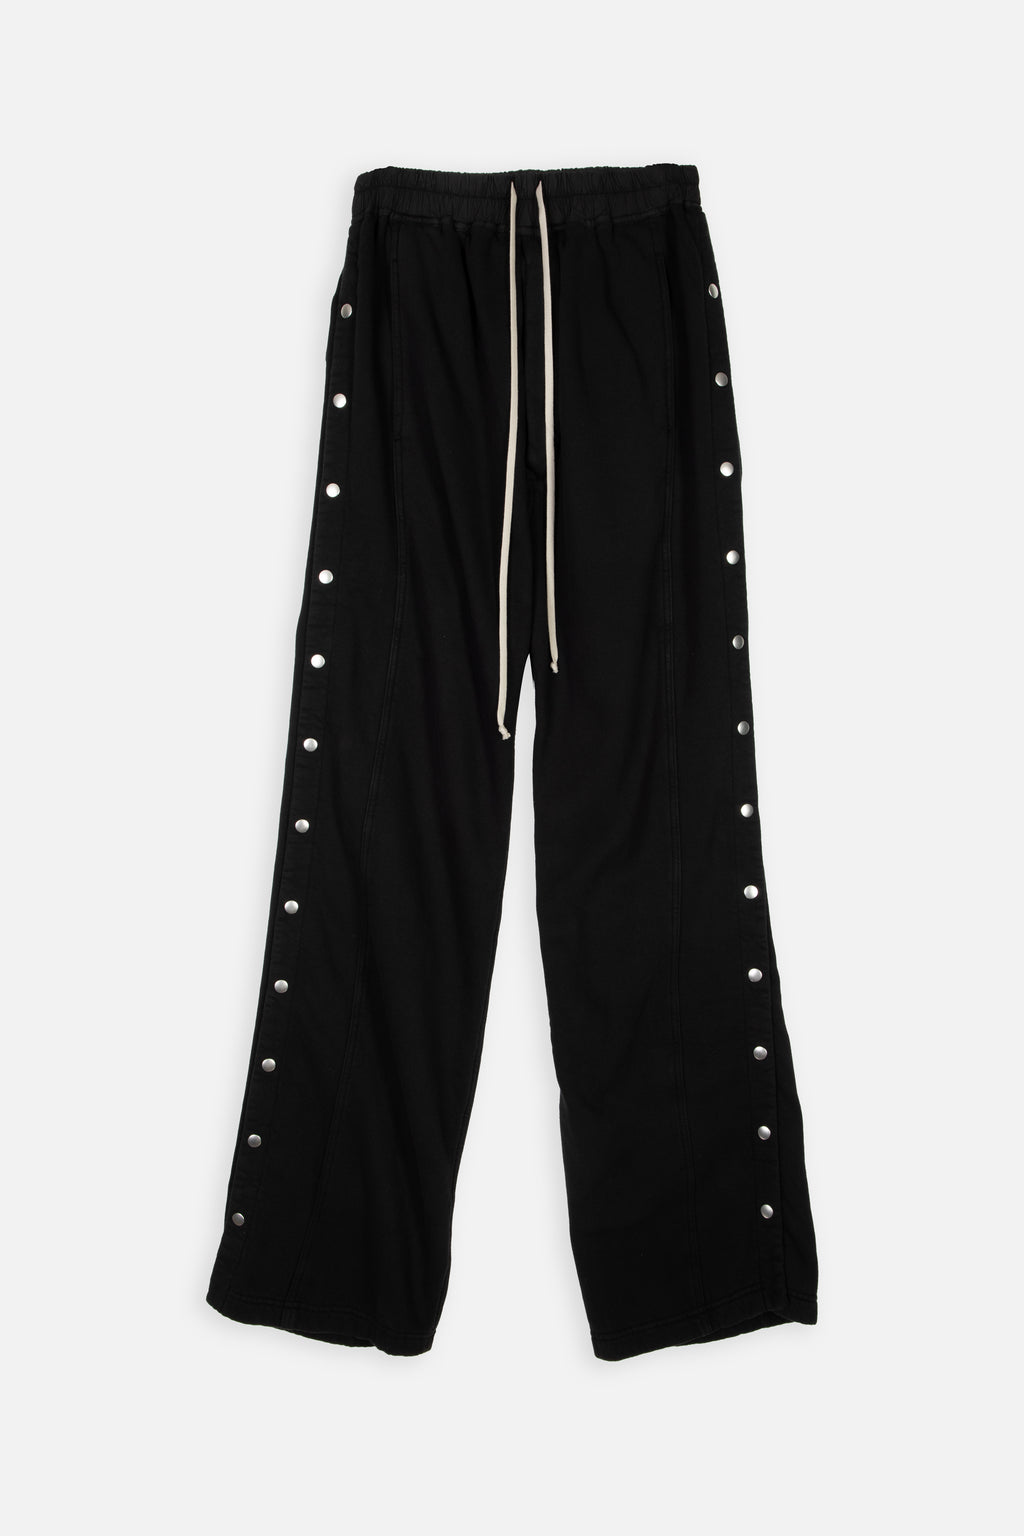 alt-image__Black-cotton-sweatpants-with-side-snaps---Pusher-Pants